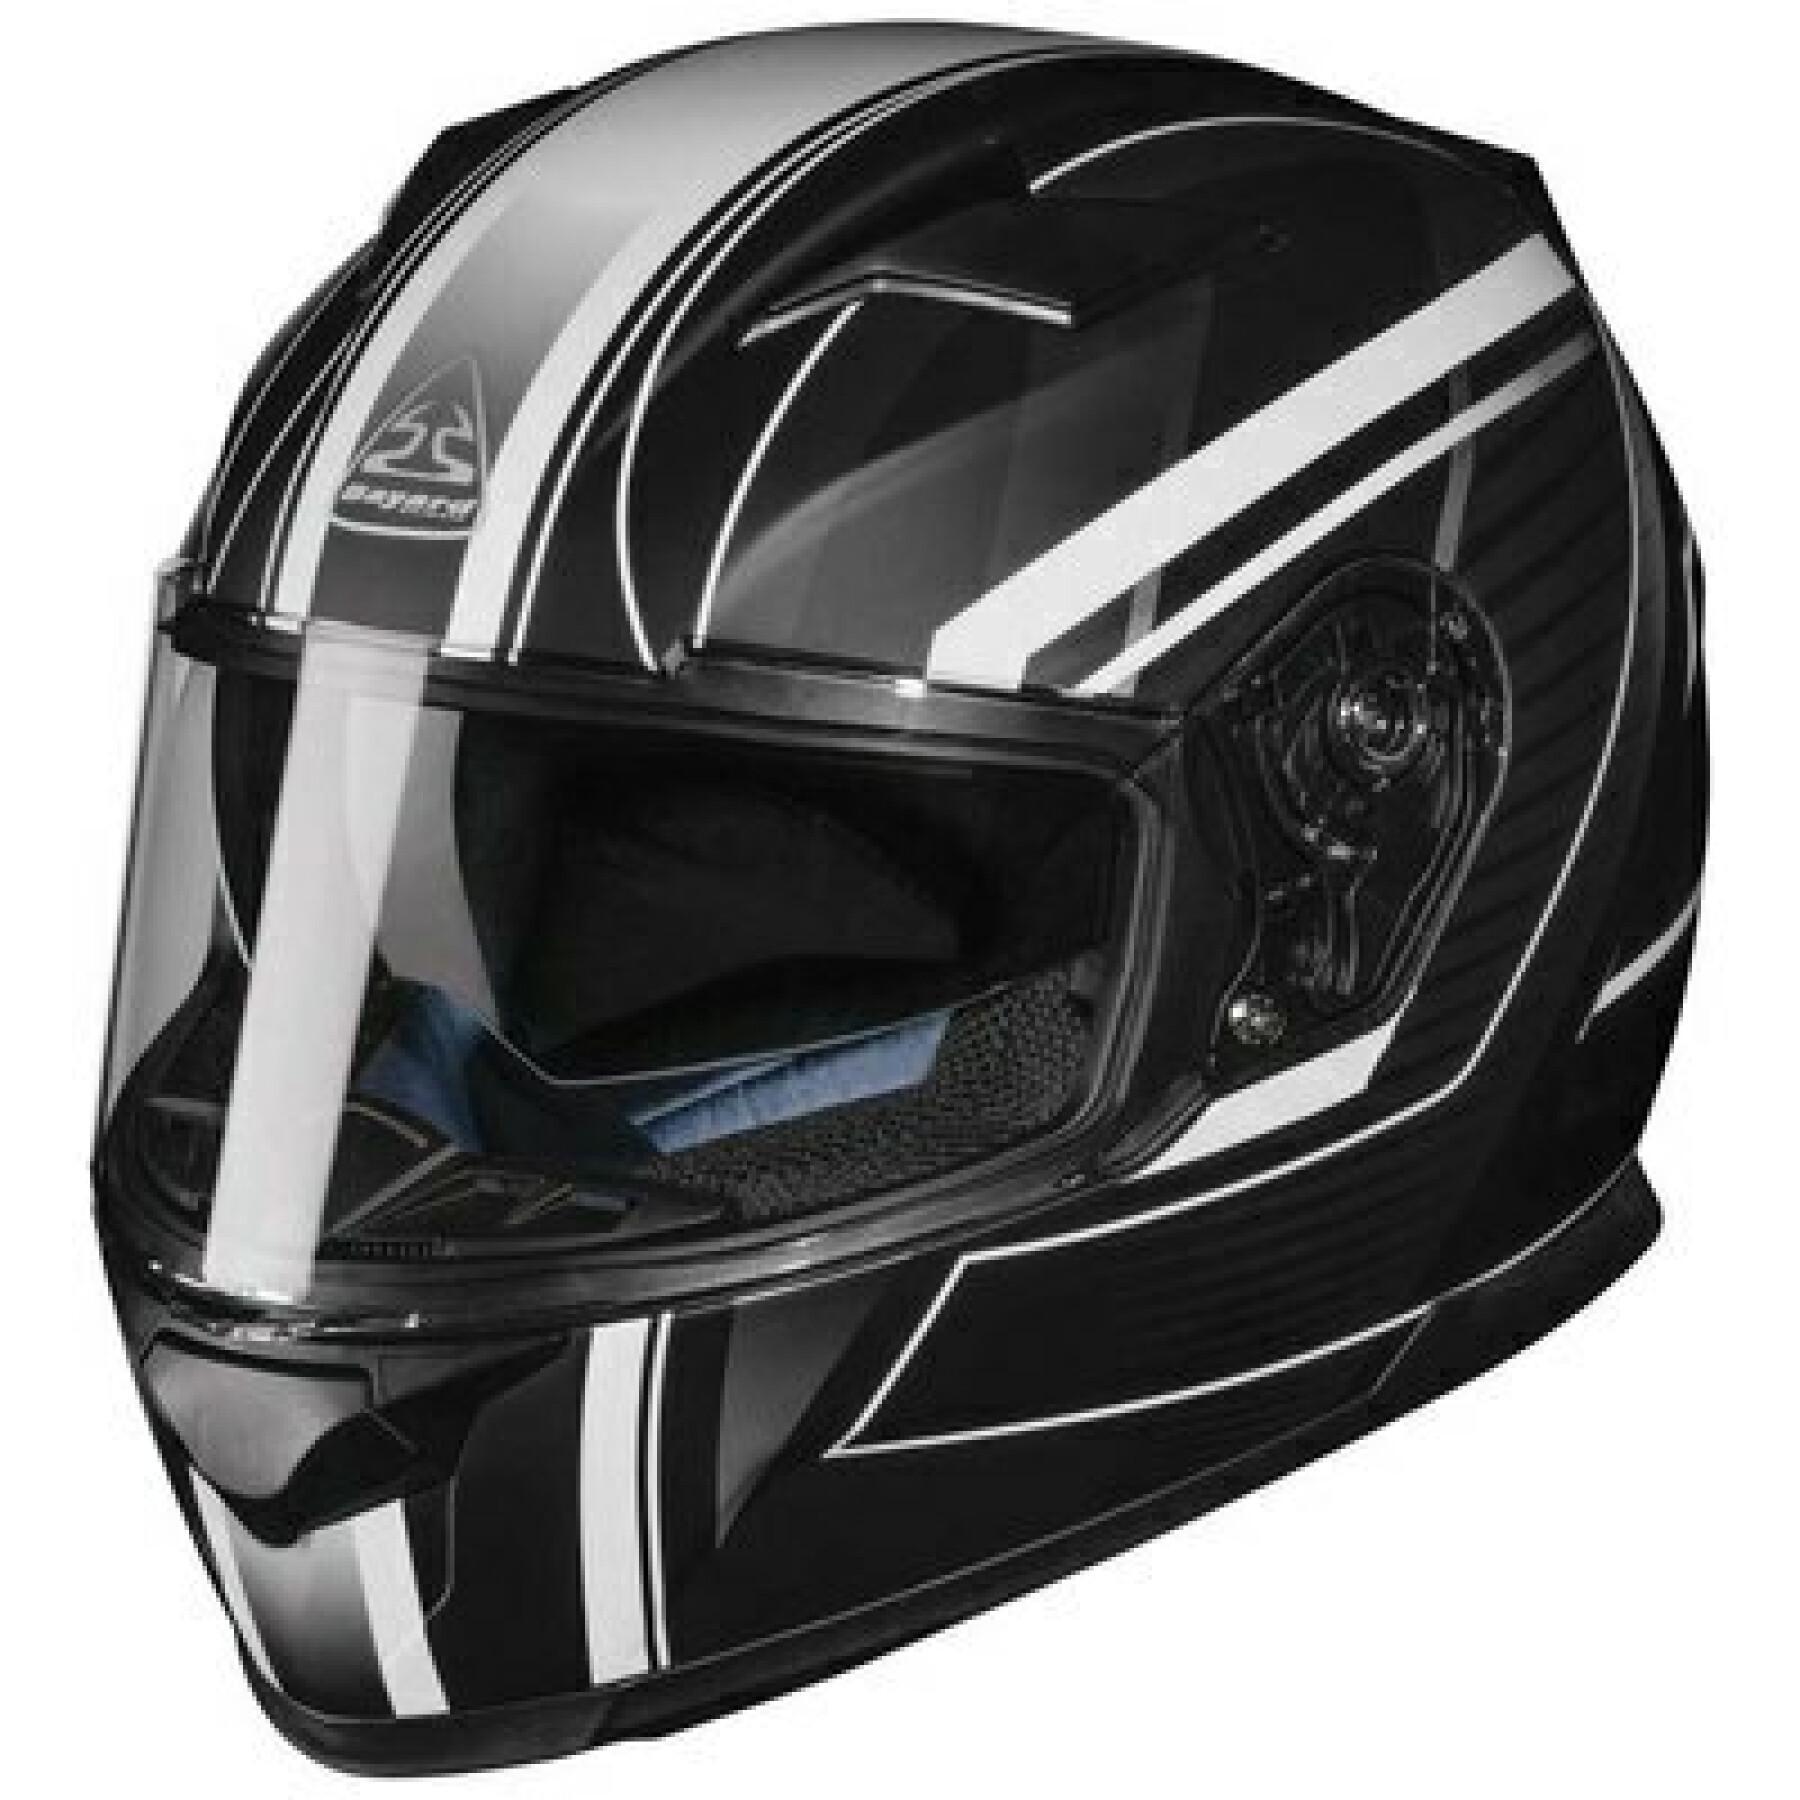 Open Face Jet Helmet Moped Motorbike Scooter Antiscratch Visor Silver S 